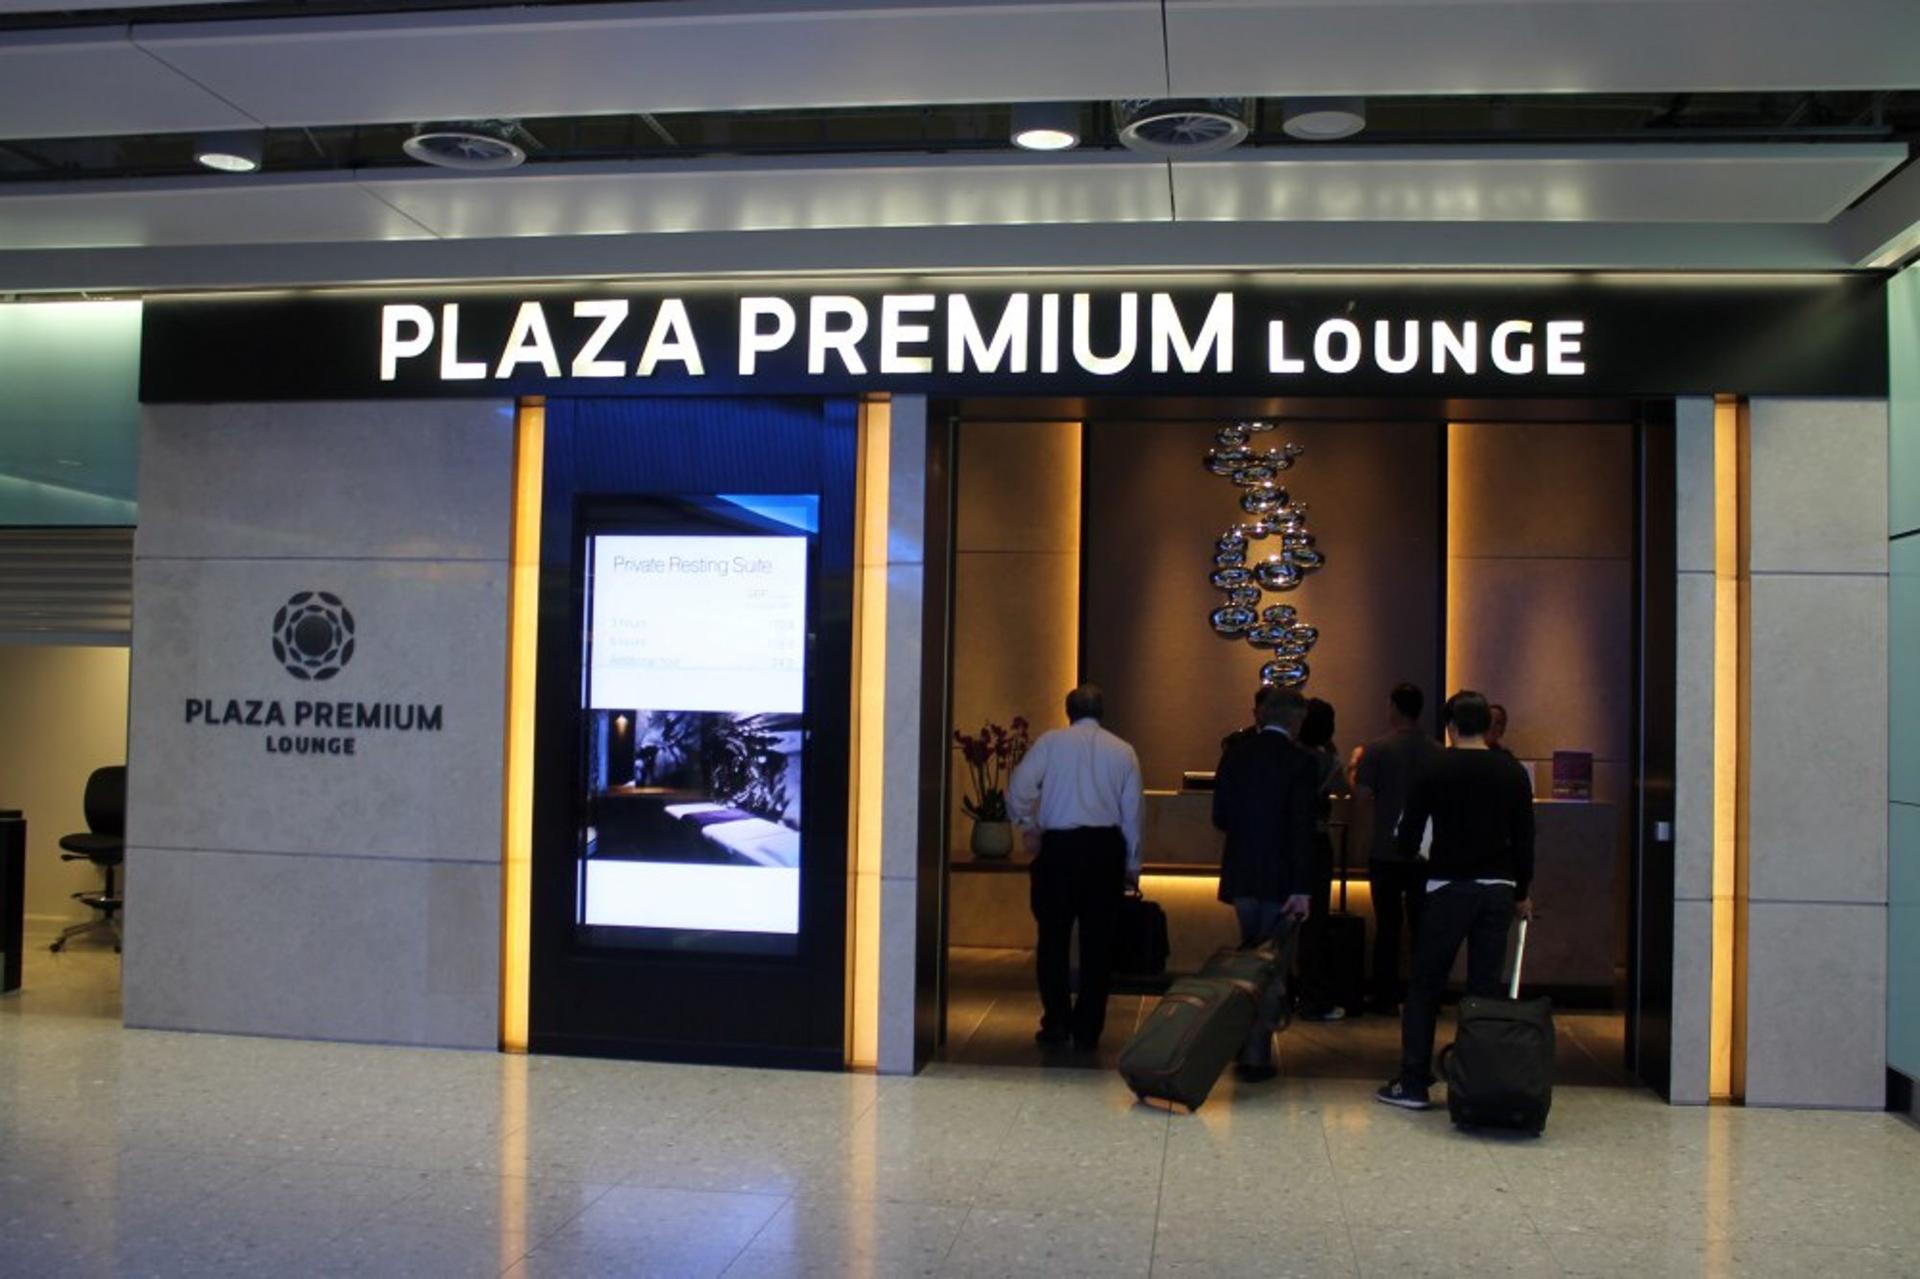 Plaza Premium Lounge image 43 of 73